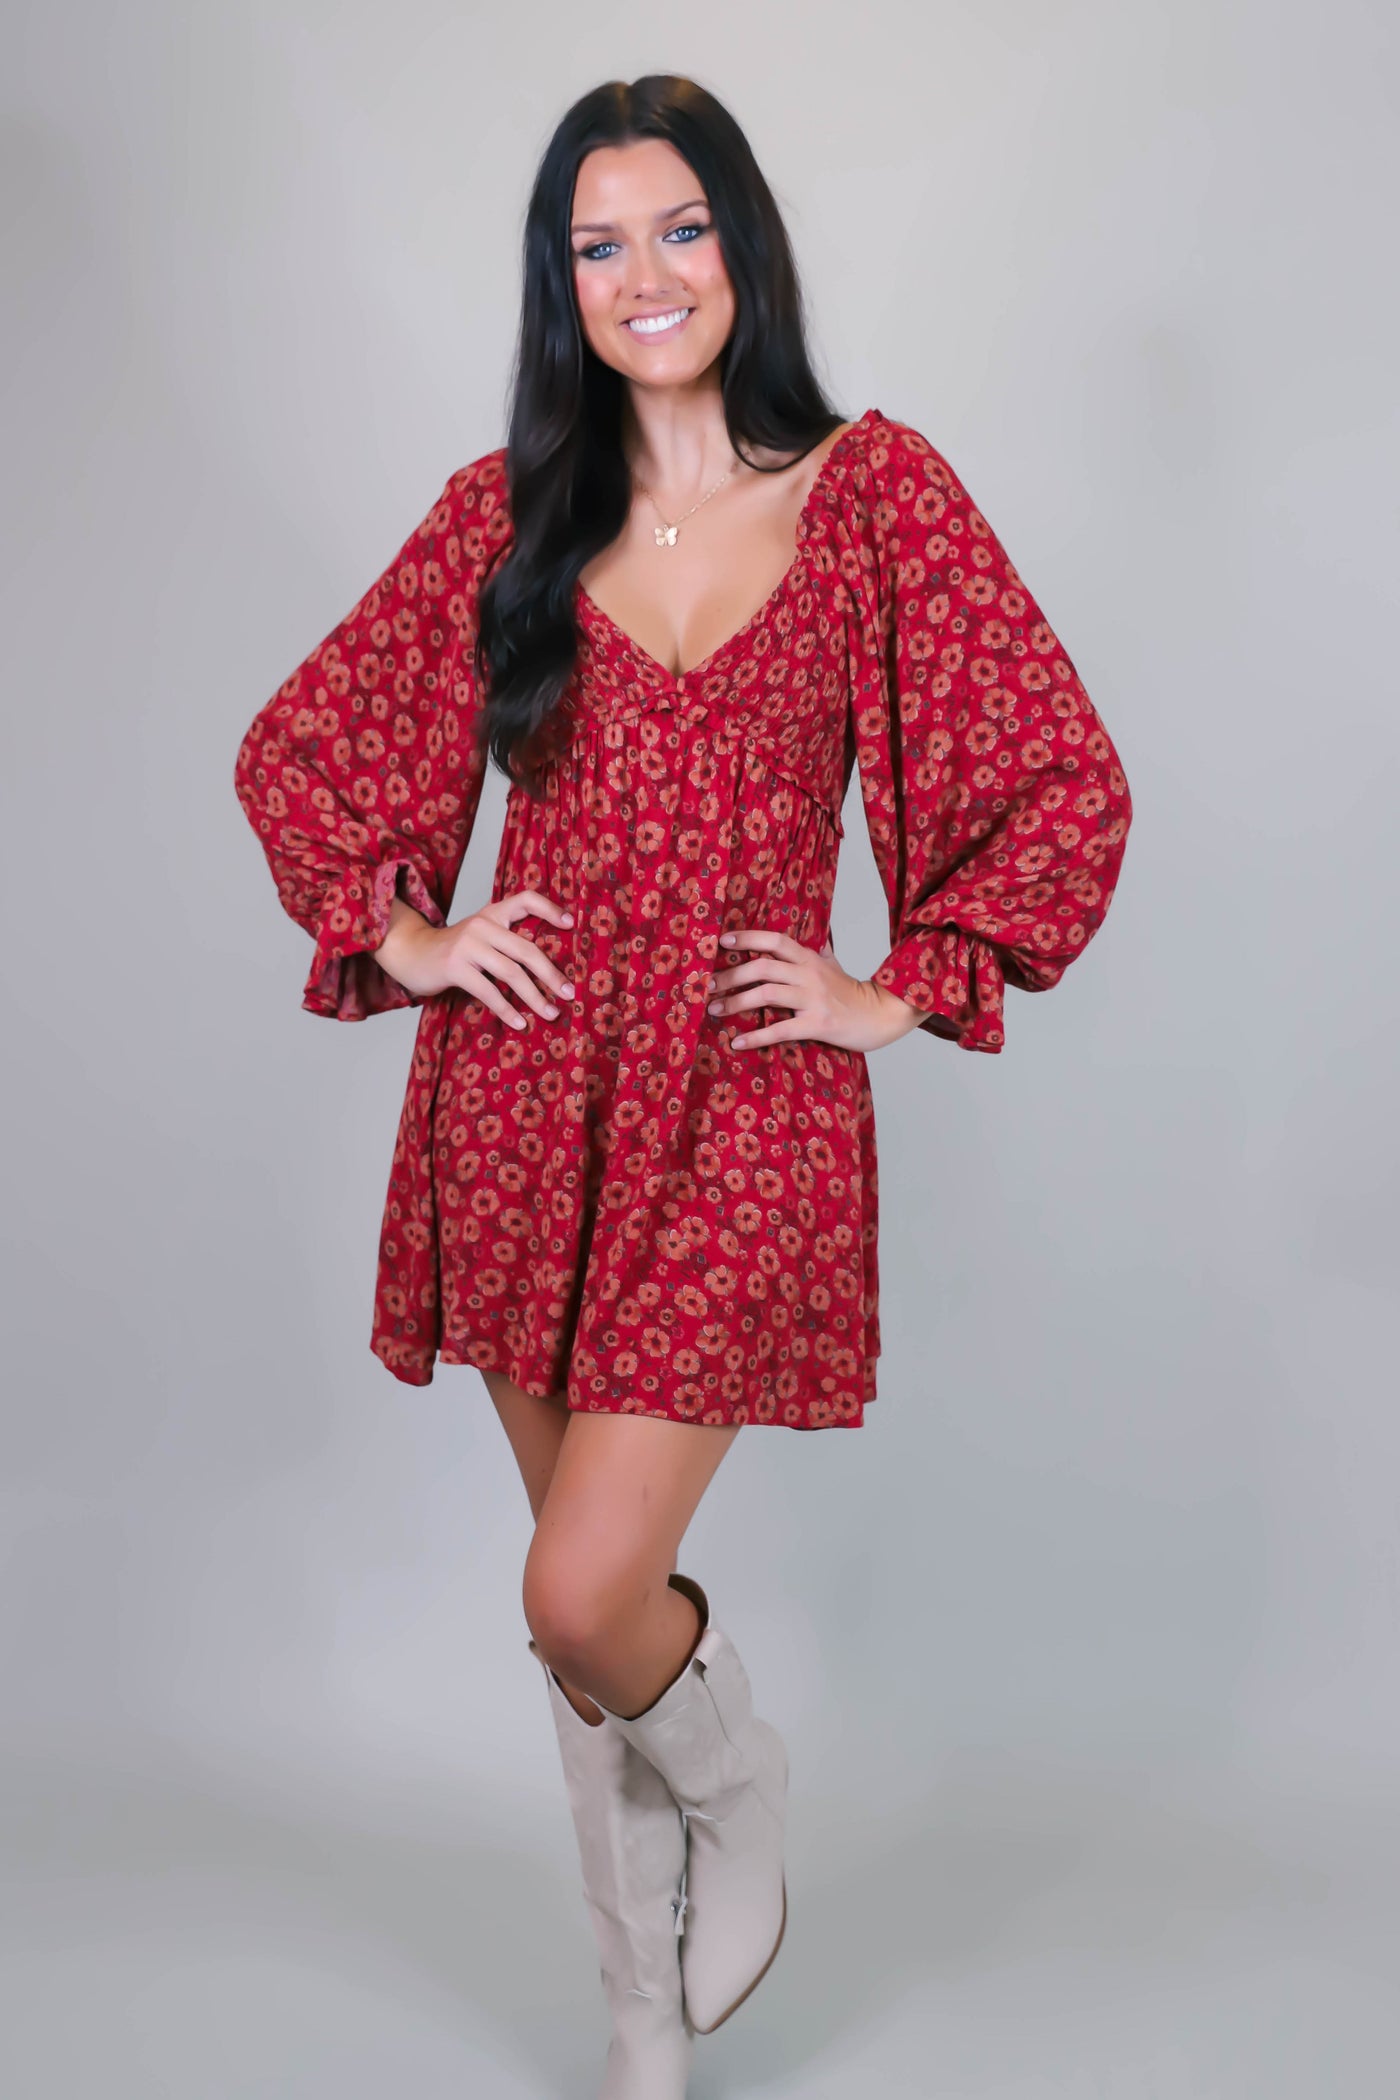 Floral Print Dress- Red Dress- Sweetheart Neckline Dress- Boho Style Dress